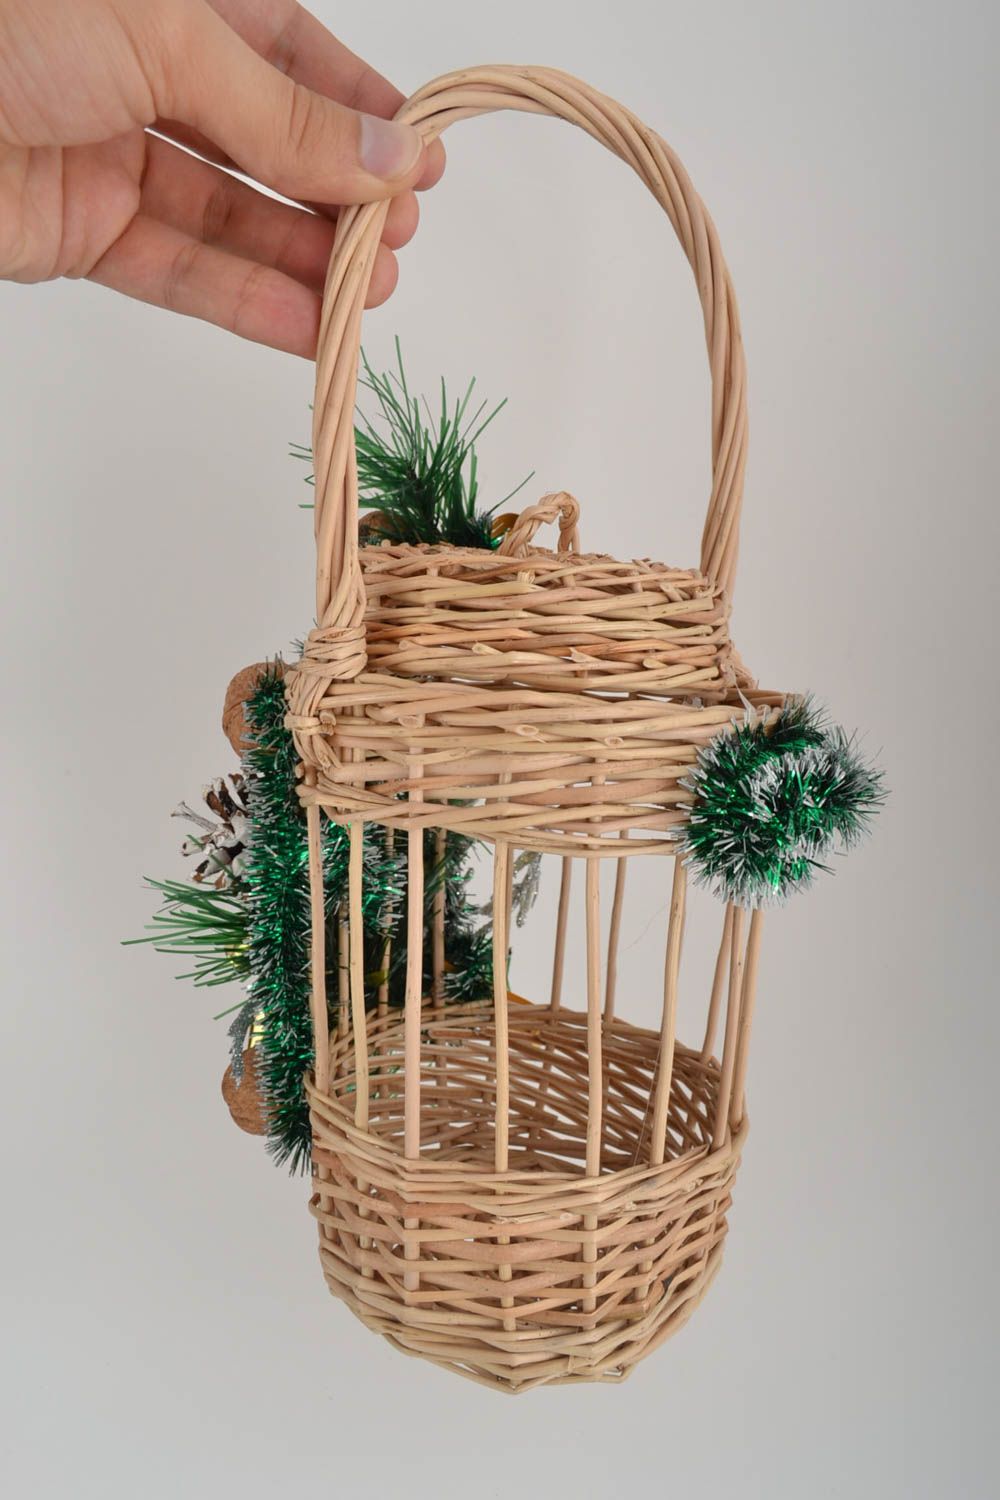 Stylish handmade basket woven basket Easter basket ideas gift ideas photo 5